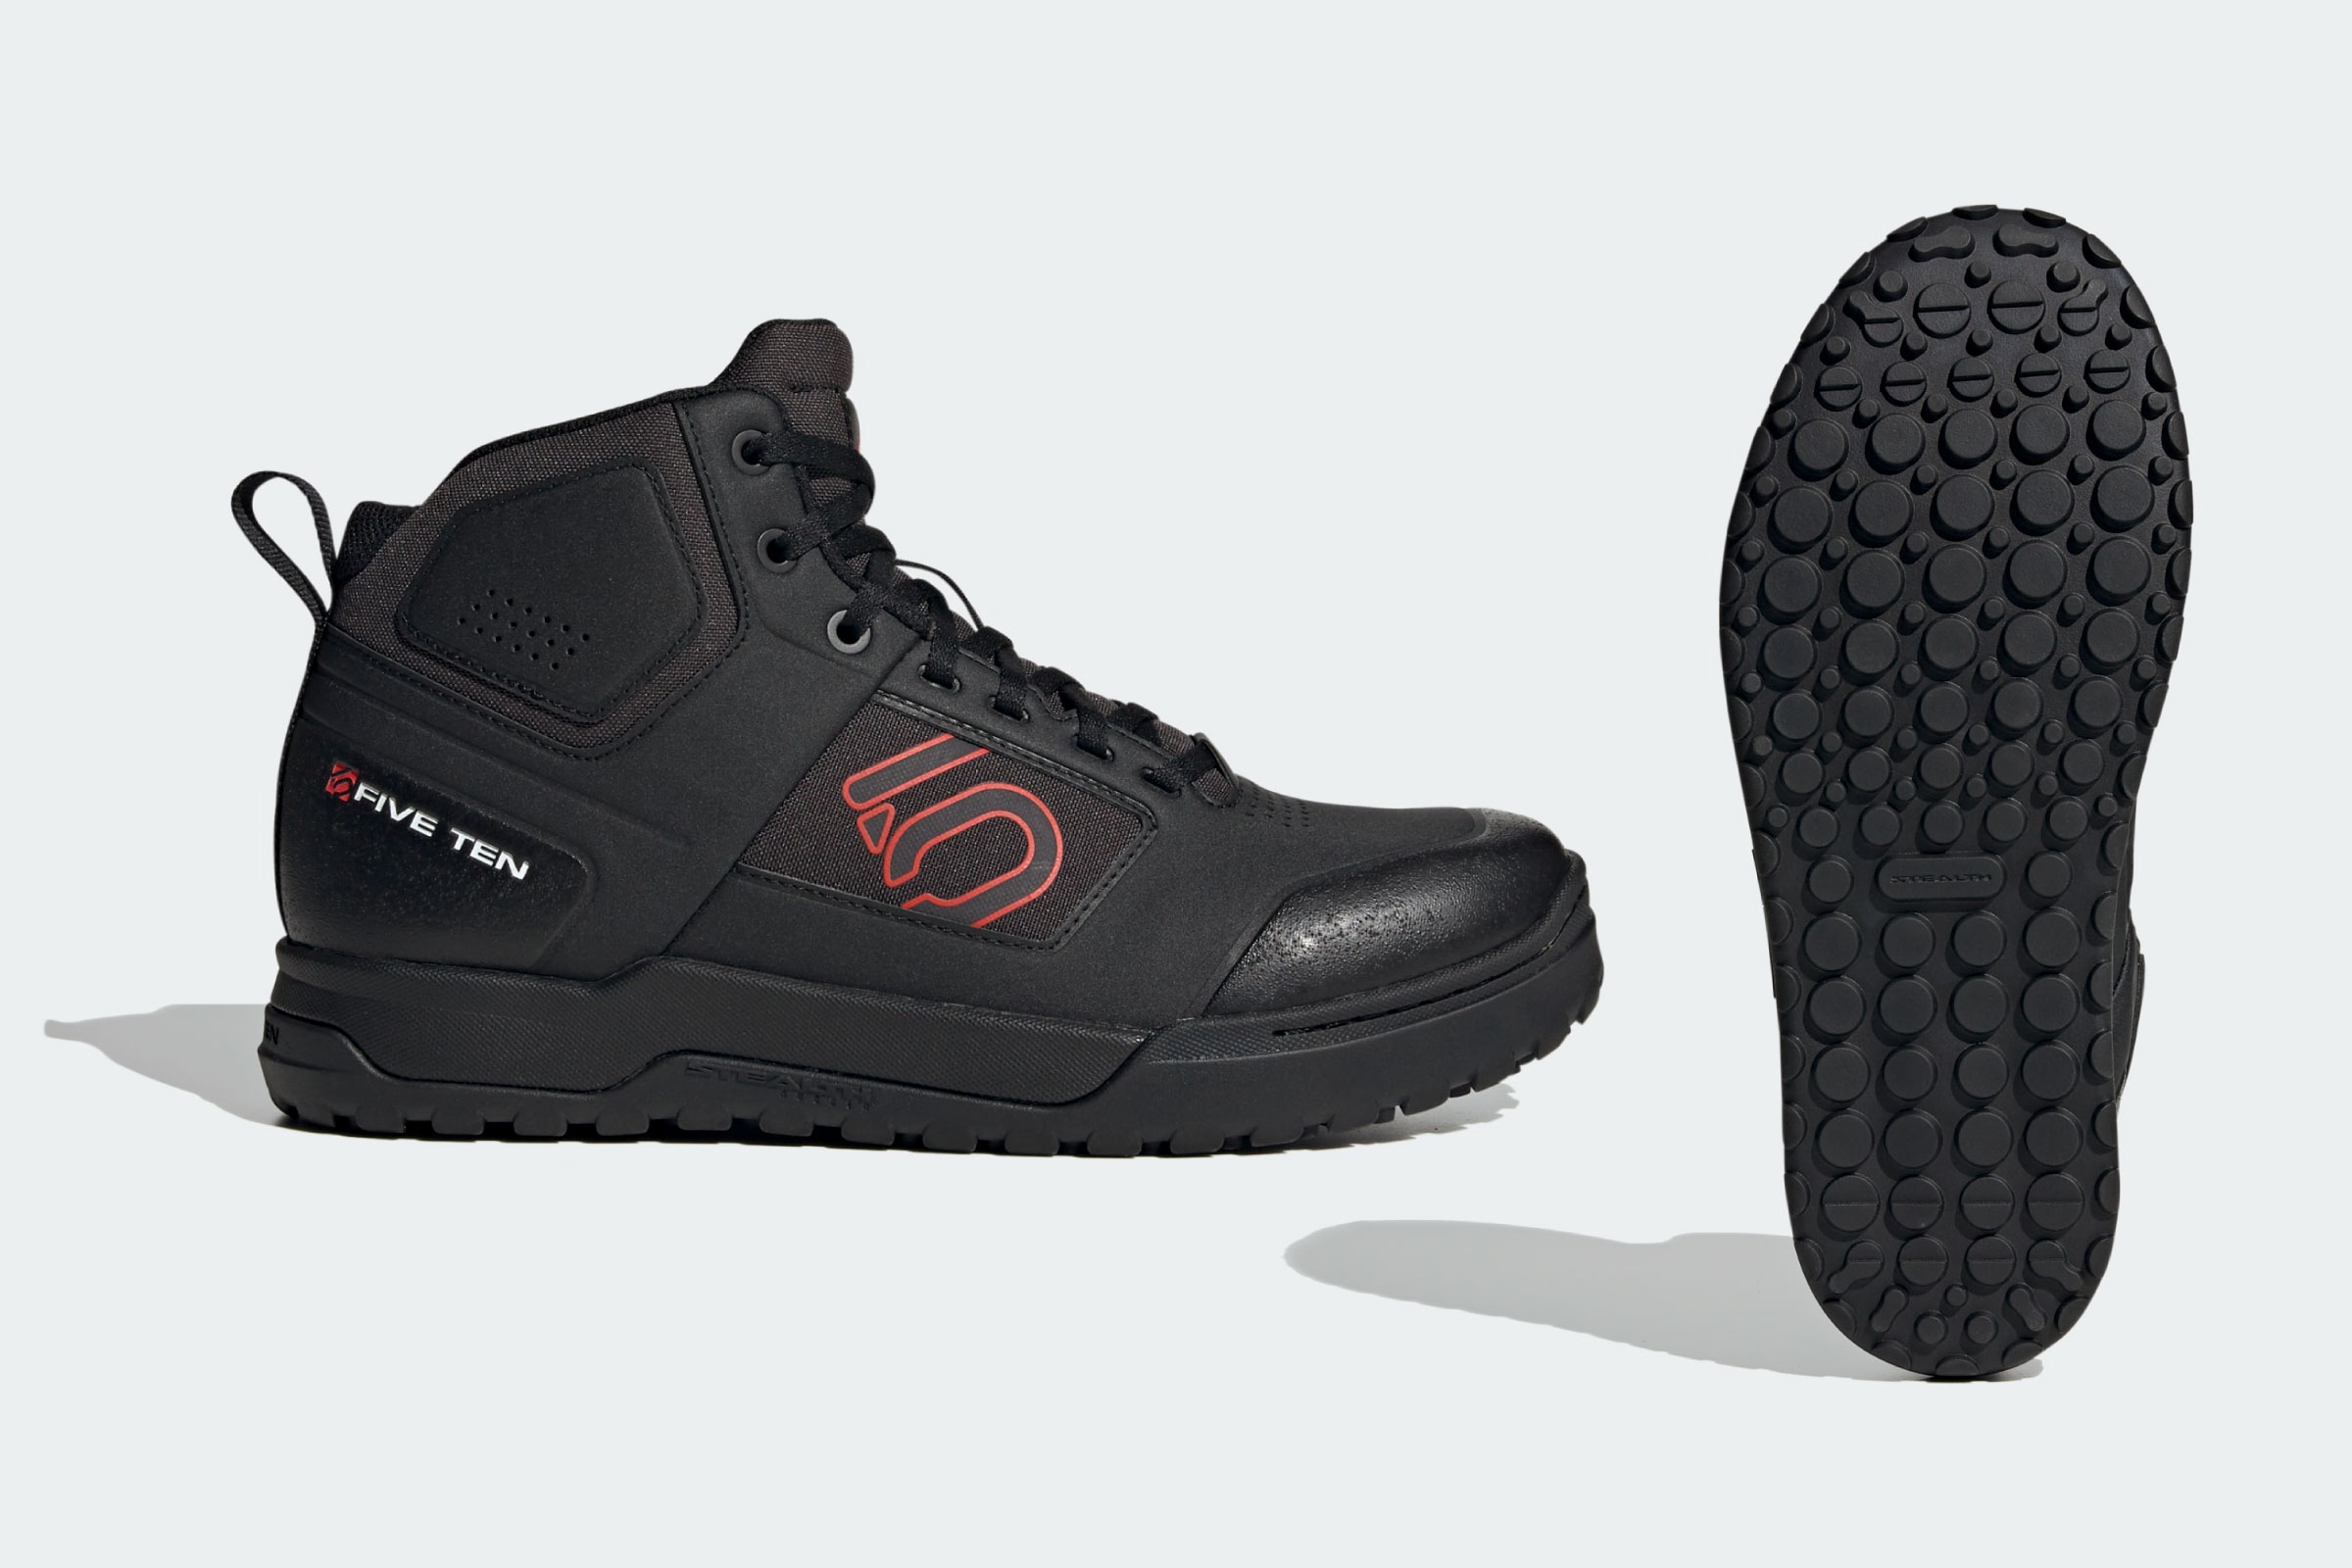 Five Ten MTB-Schuhe Impact Pro Core Black/Red/Footwear White 